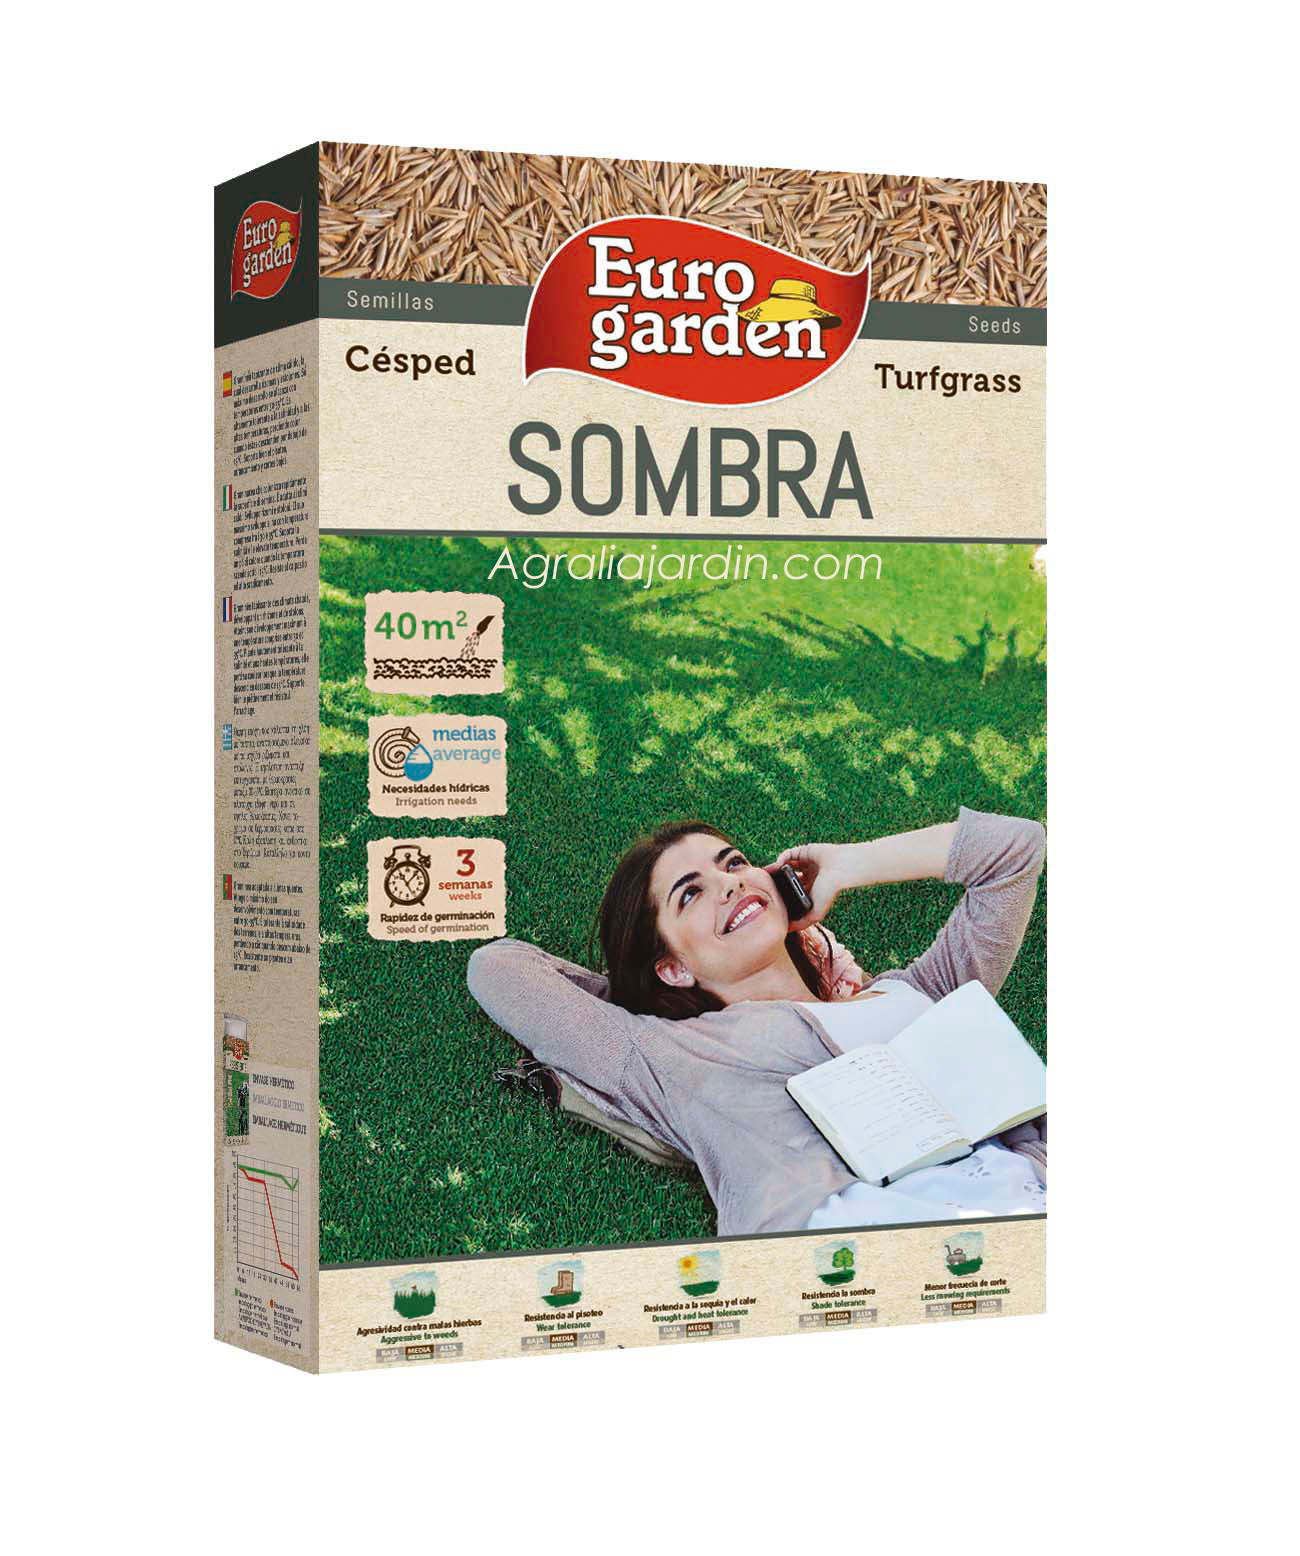 Cesped Sombra semilla eurogarden agraliajardin